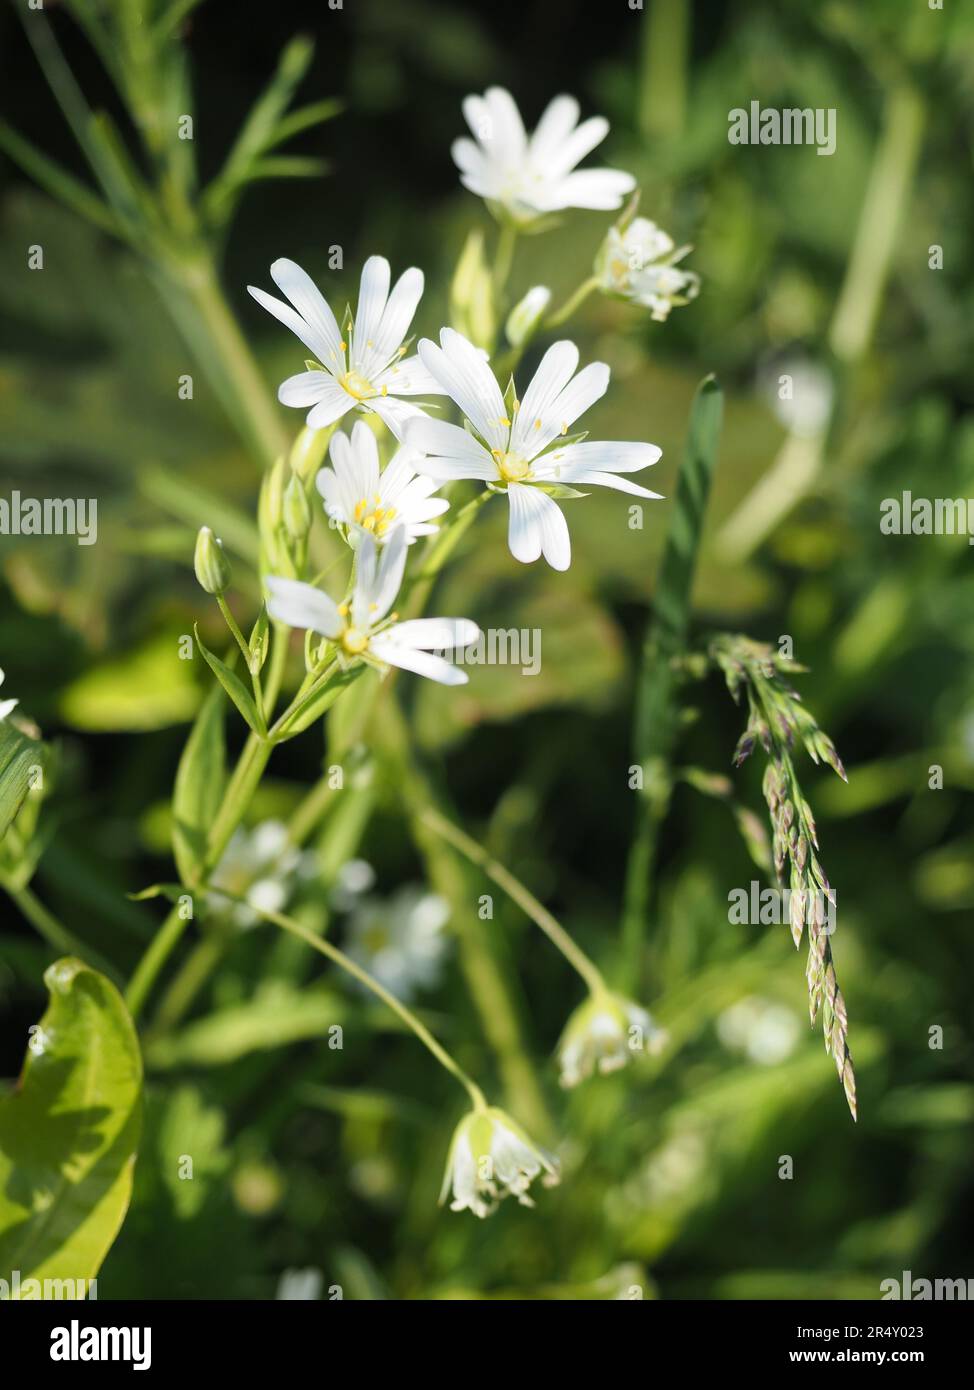 Chickweed (stellaria media) flowers next to grass Stock Photo